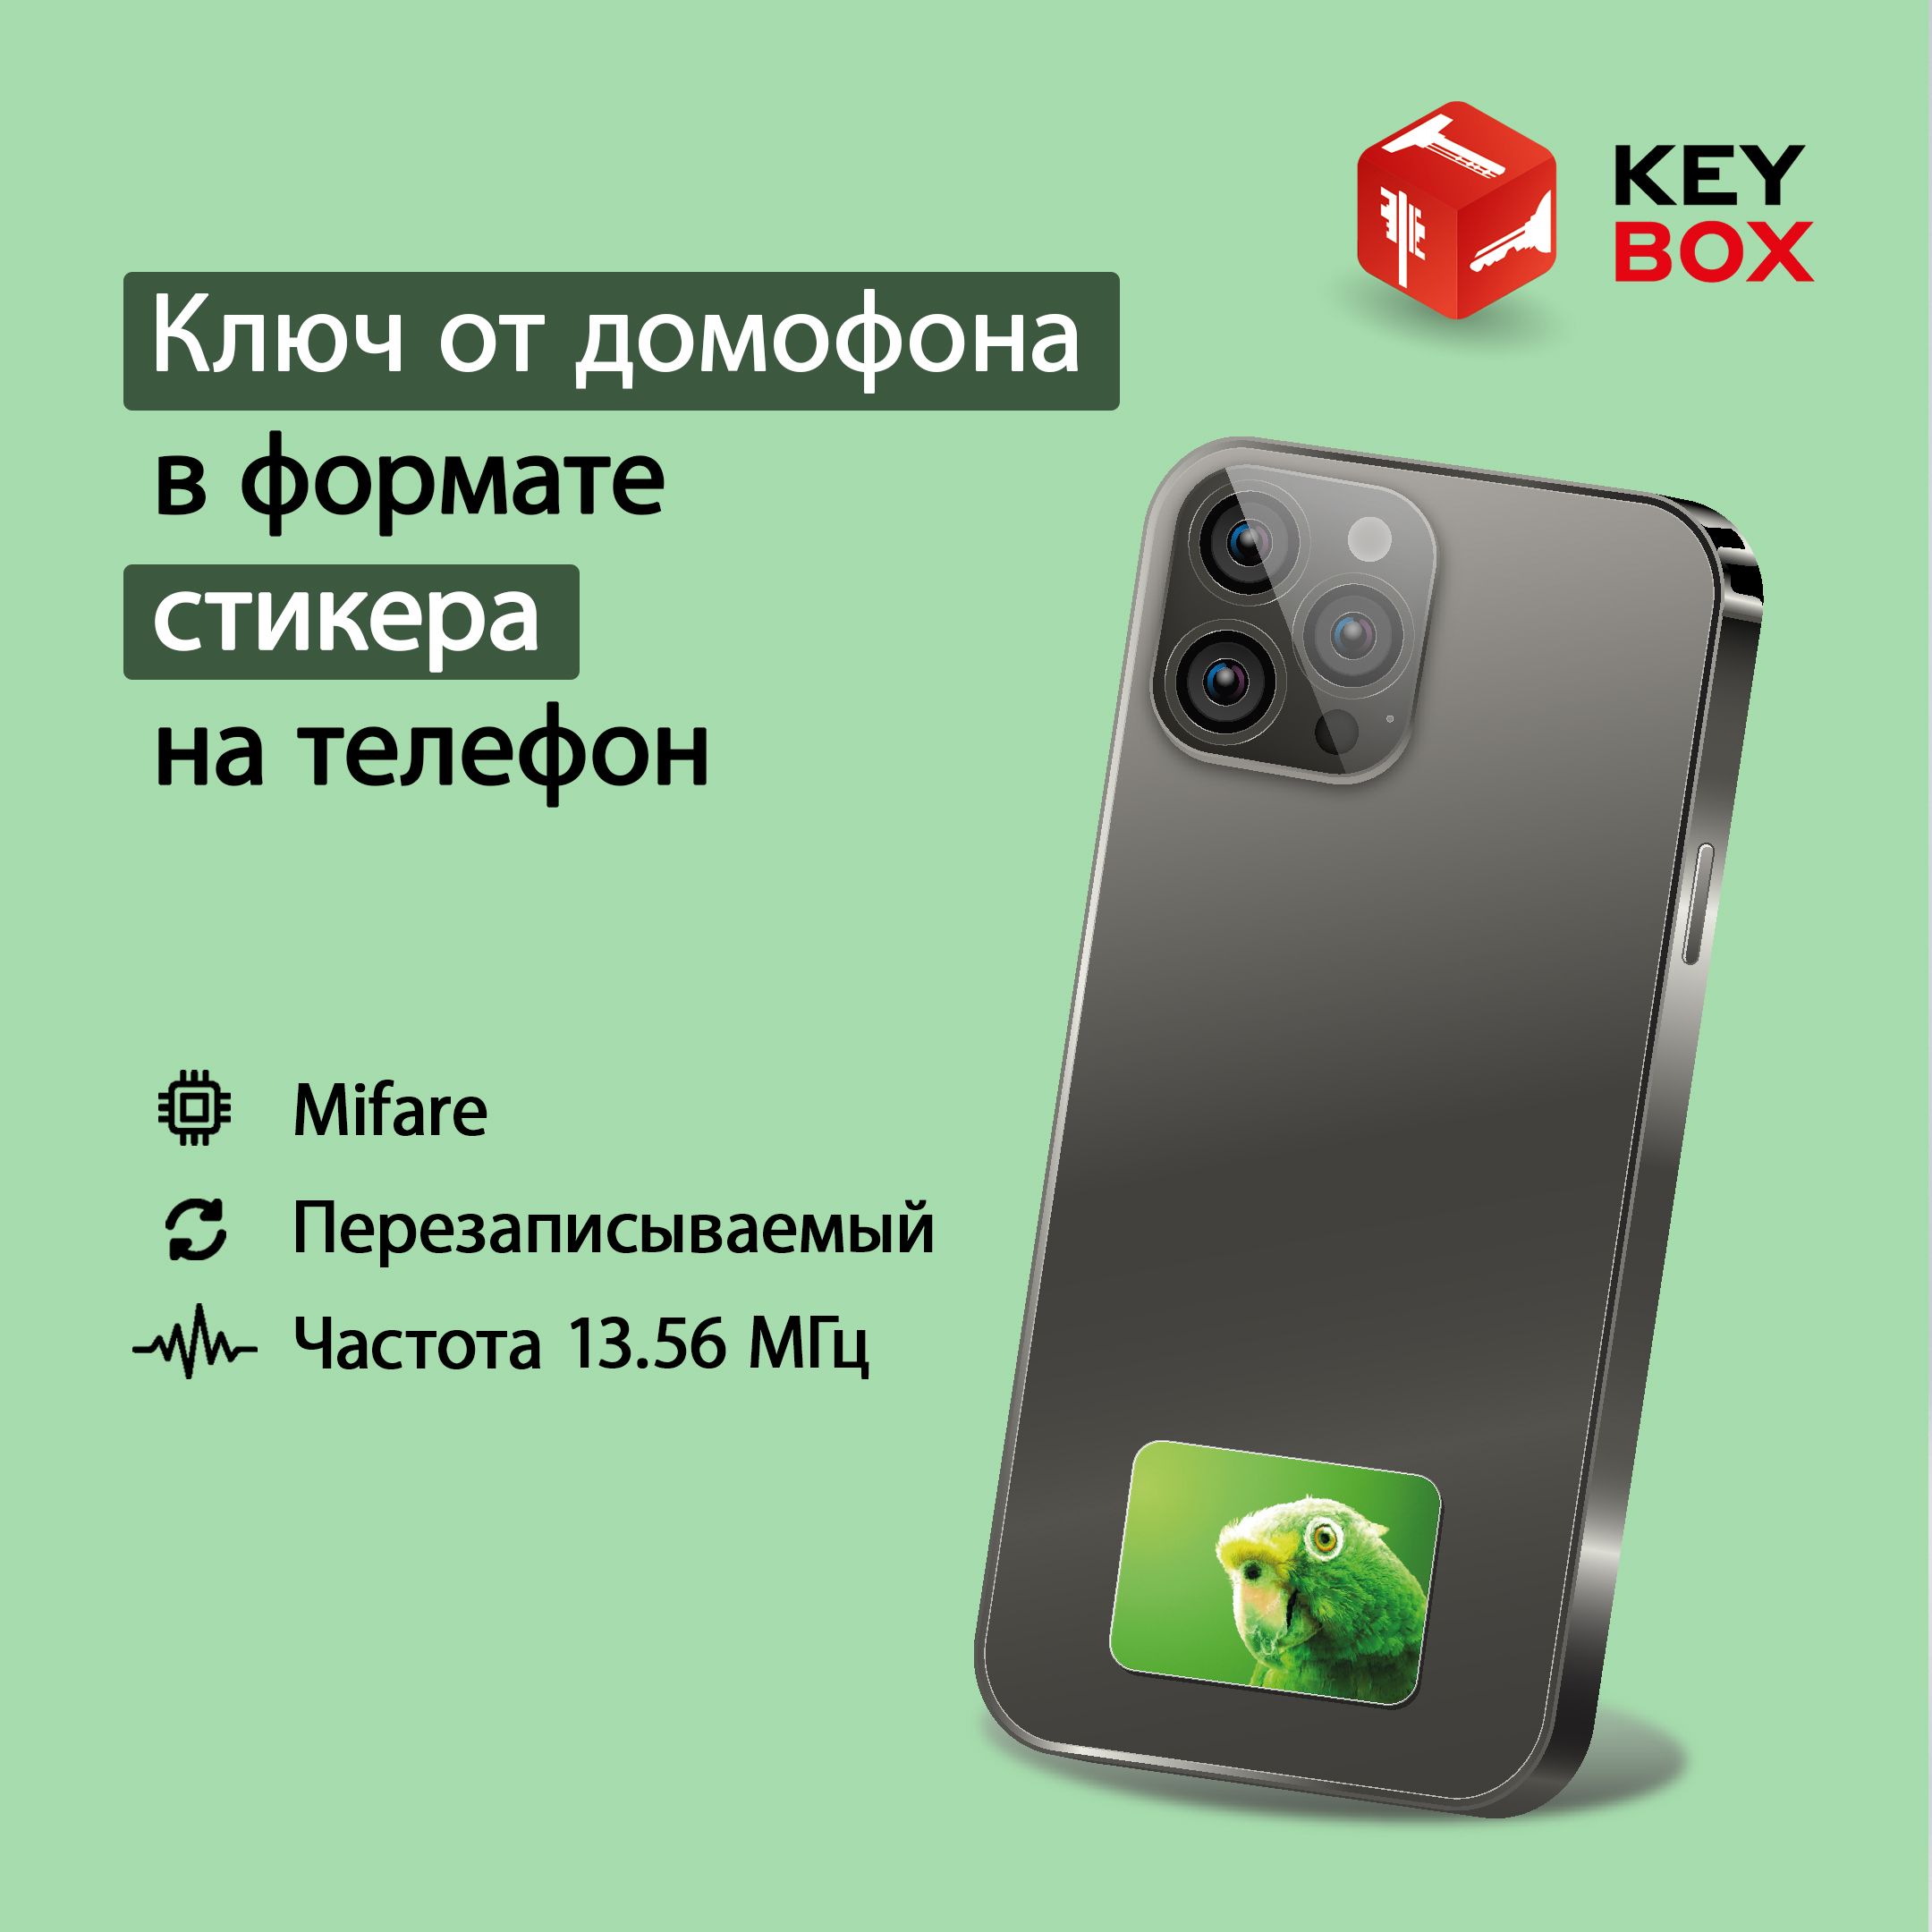 Ключ-стикер для домофона на телефон Keybox Mifare St011, Попугай картхолдер на телефон серый